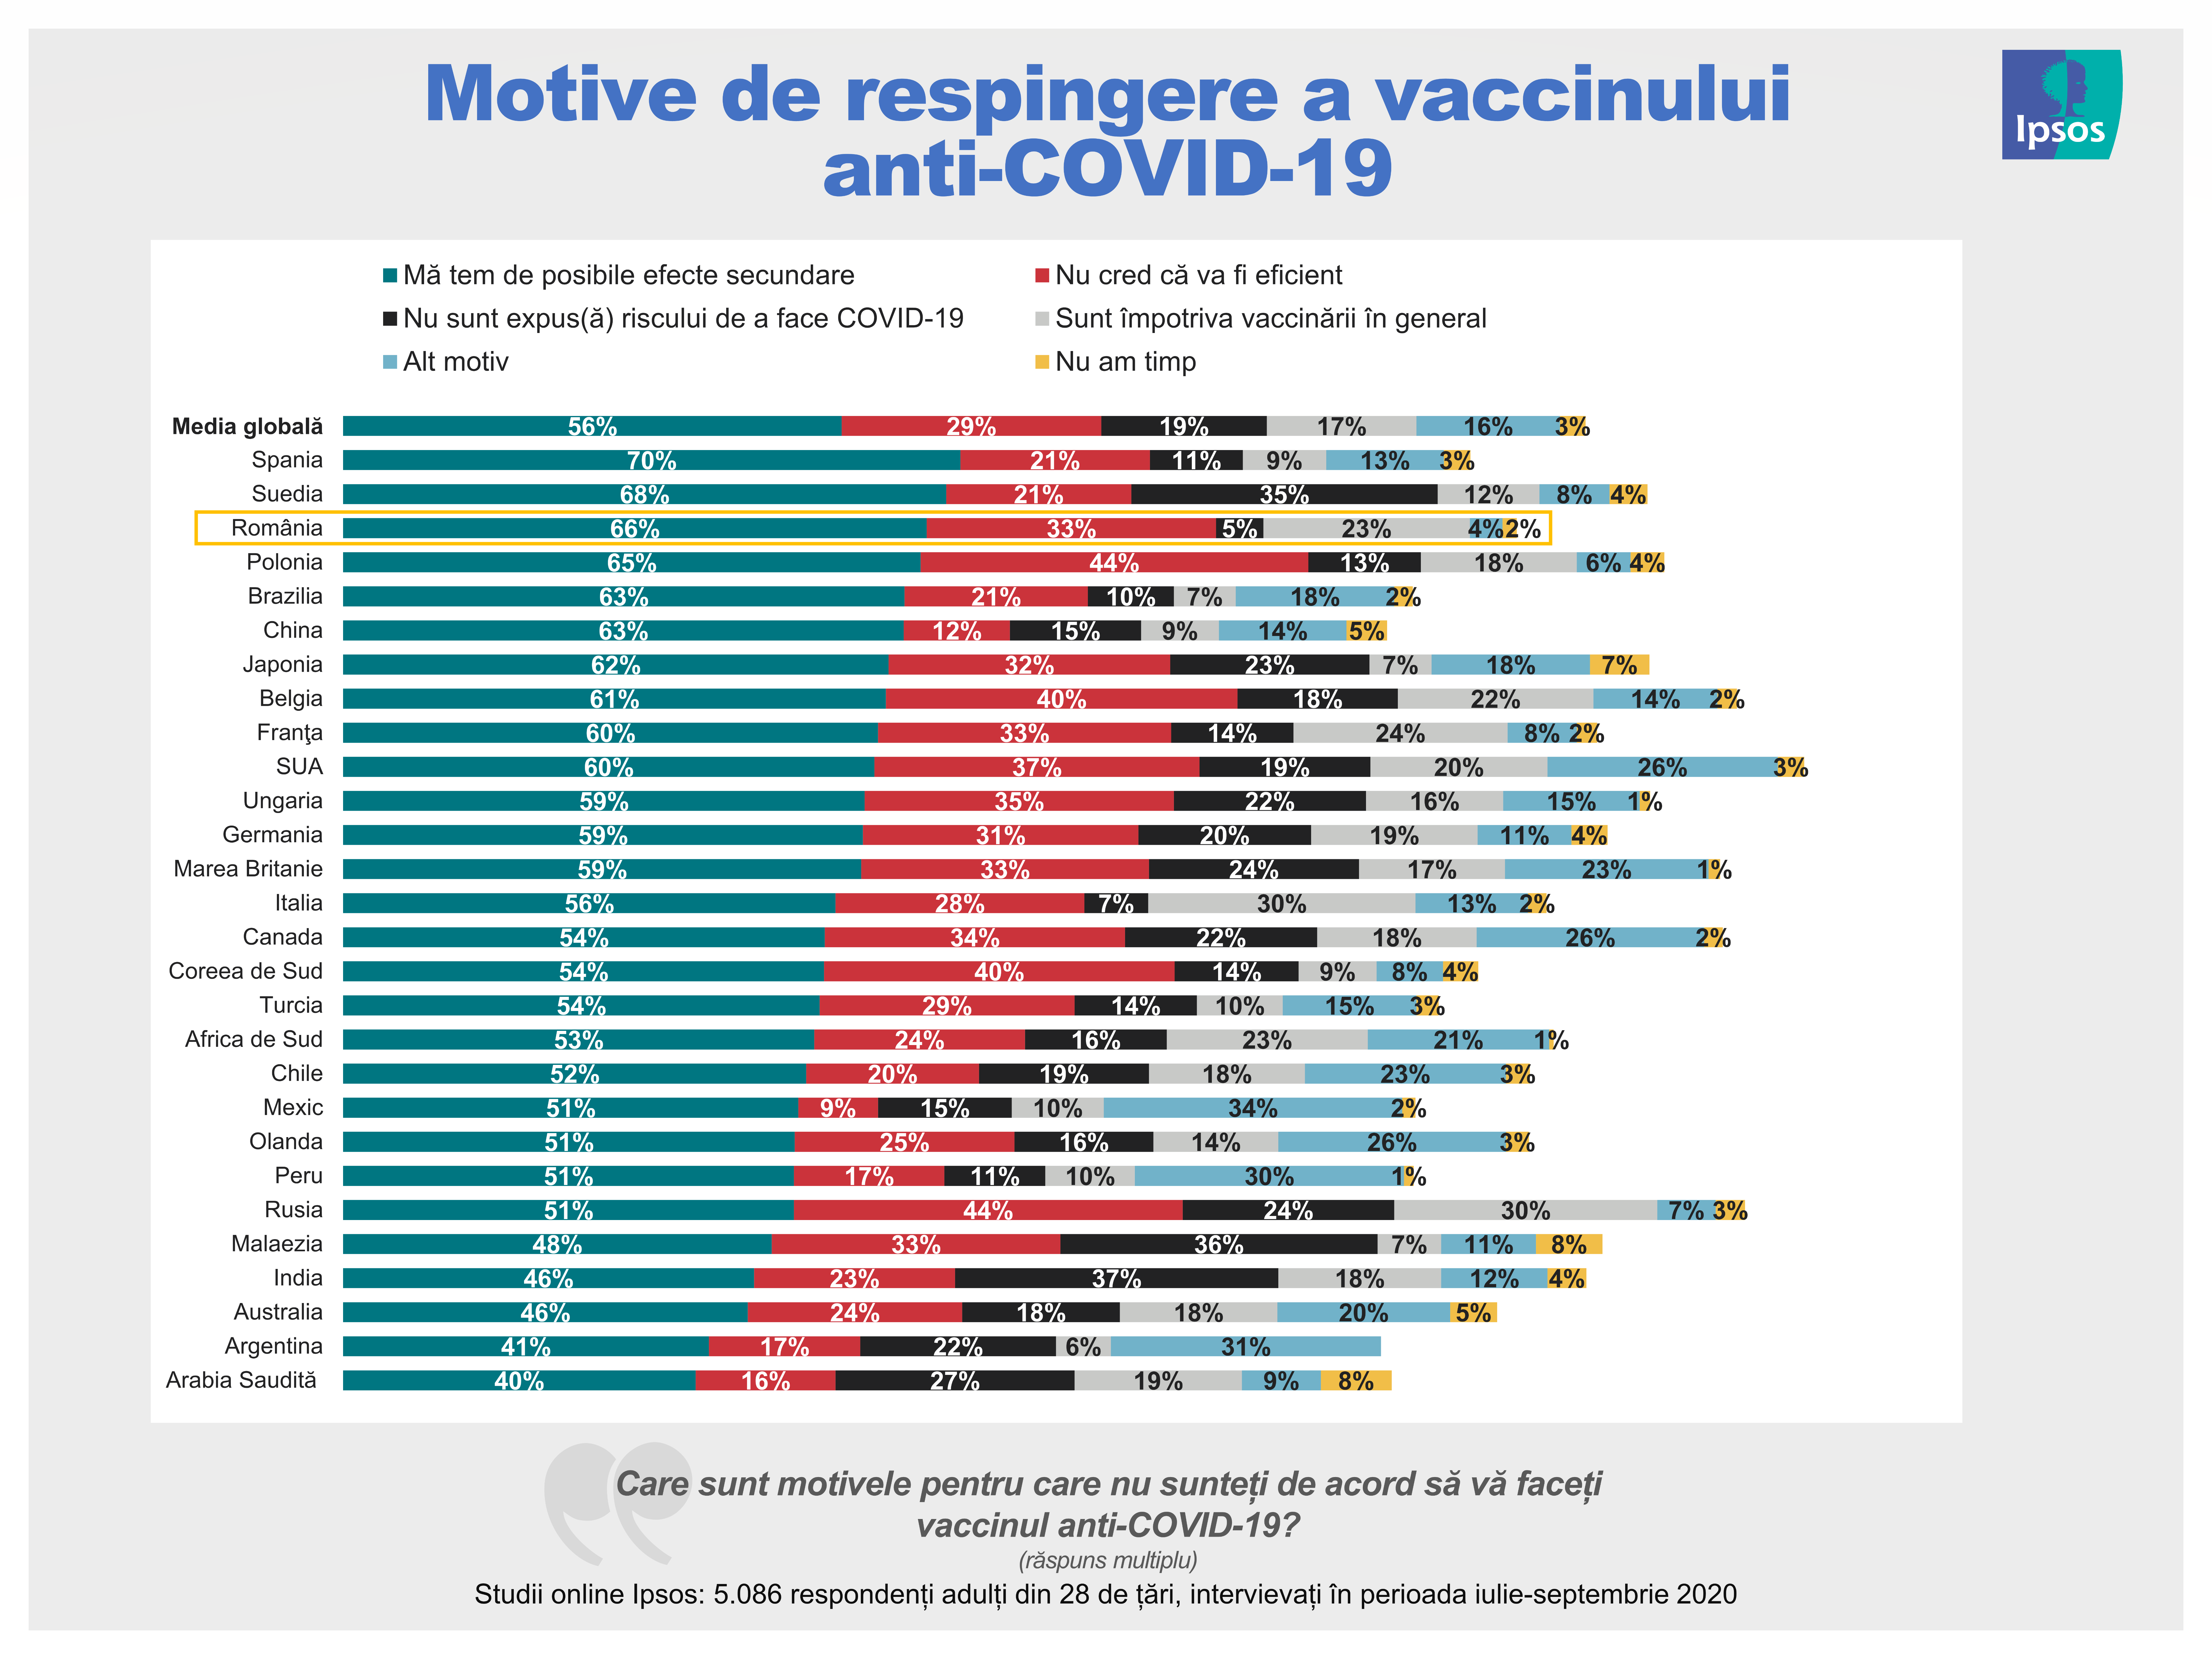 Infografie Ipsos - Motive de respingere vaccin anti-COVID-19